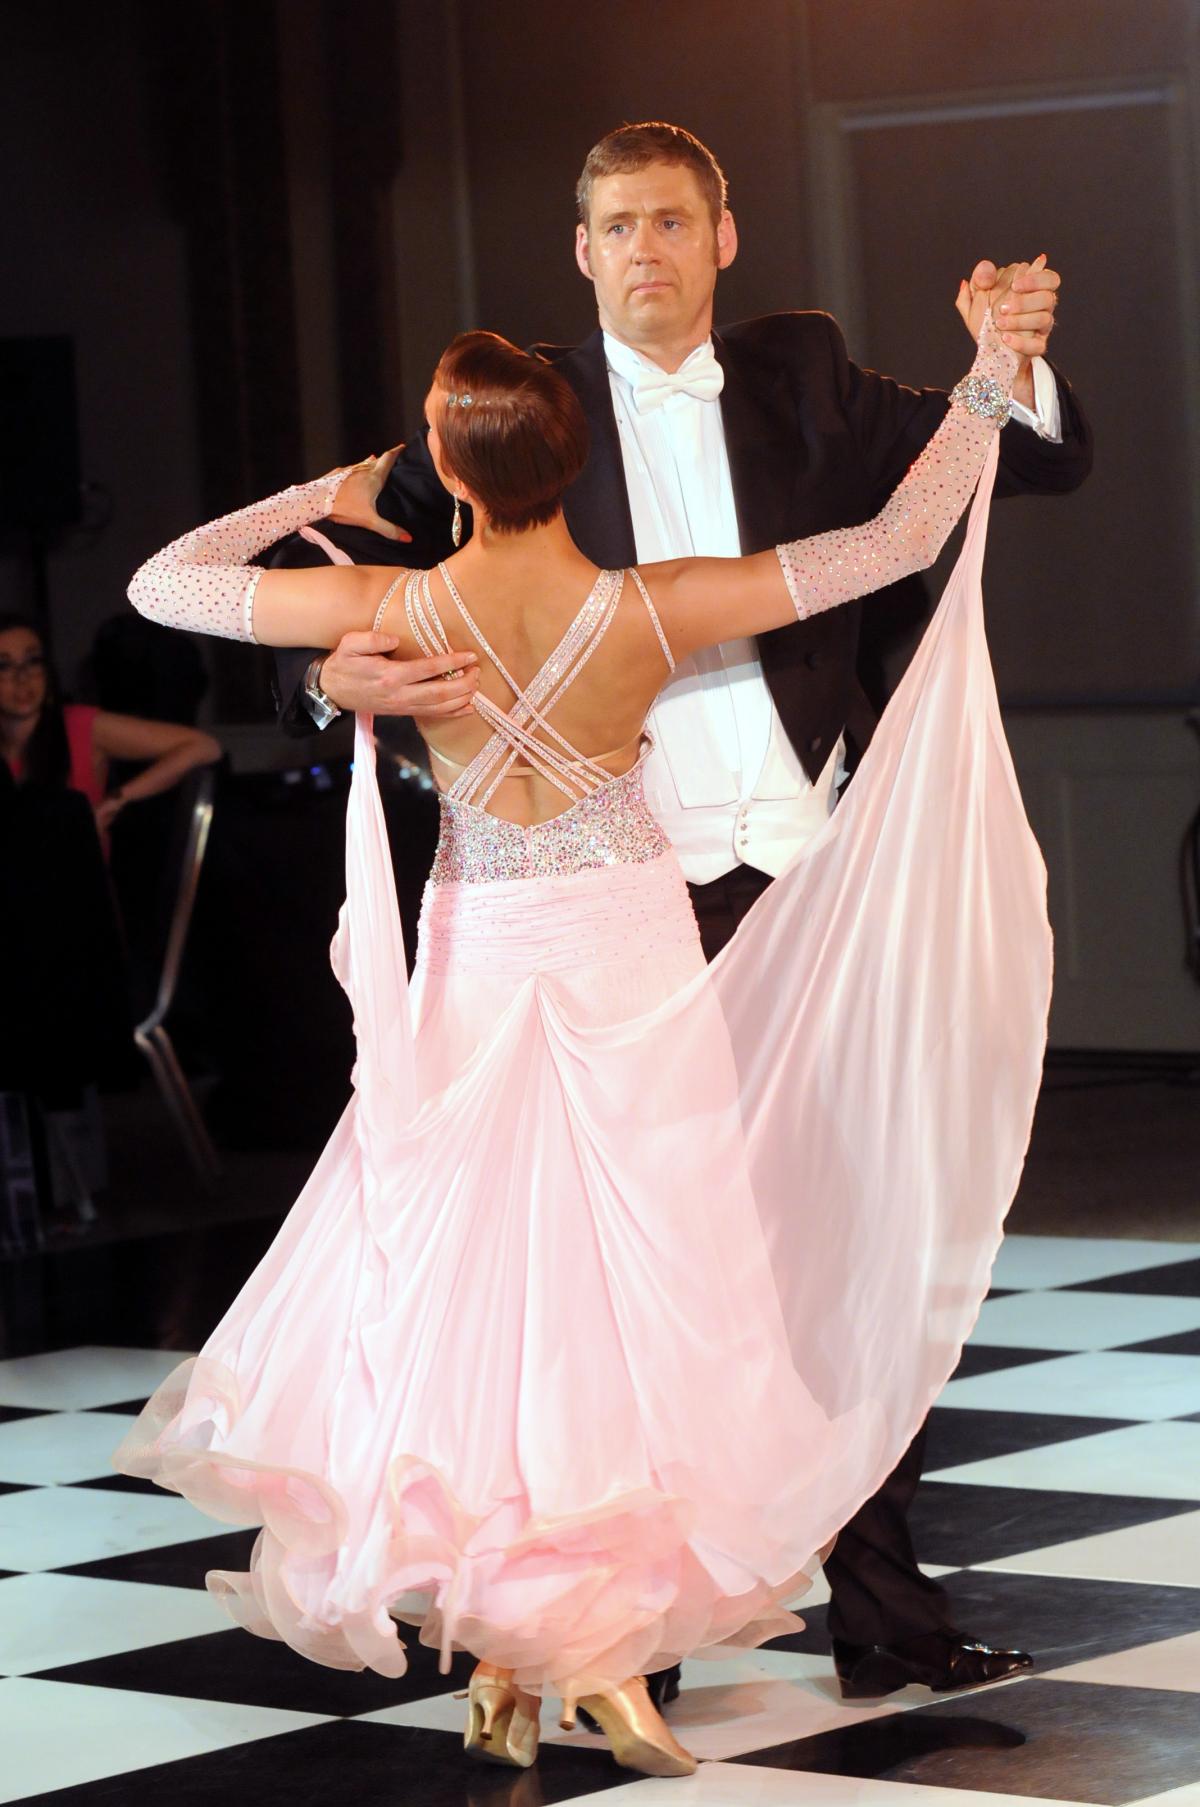 Paul Gallon takes a twirl on the dance floor